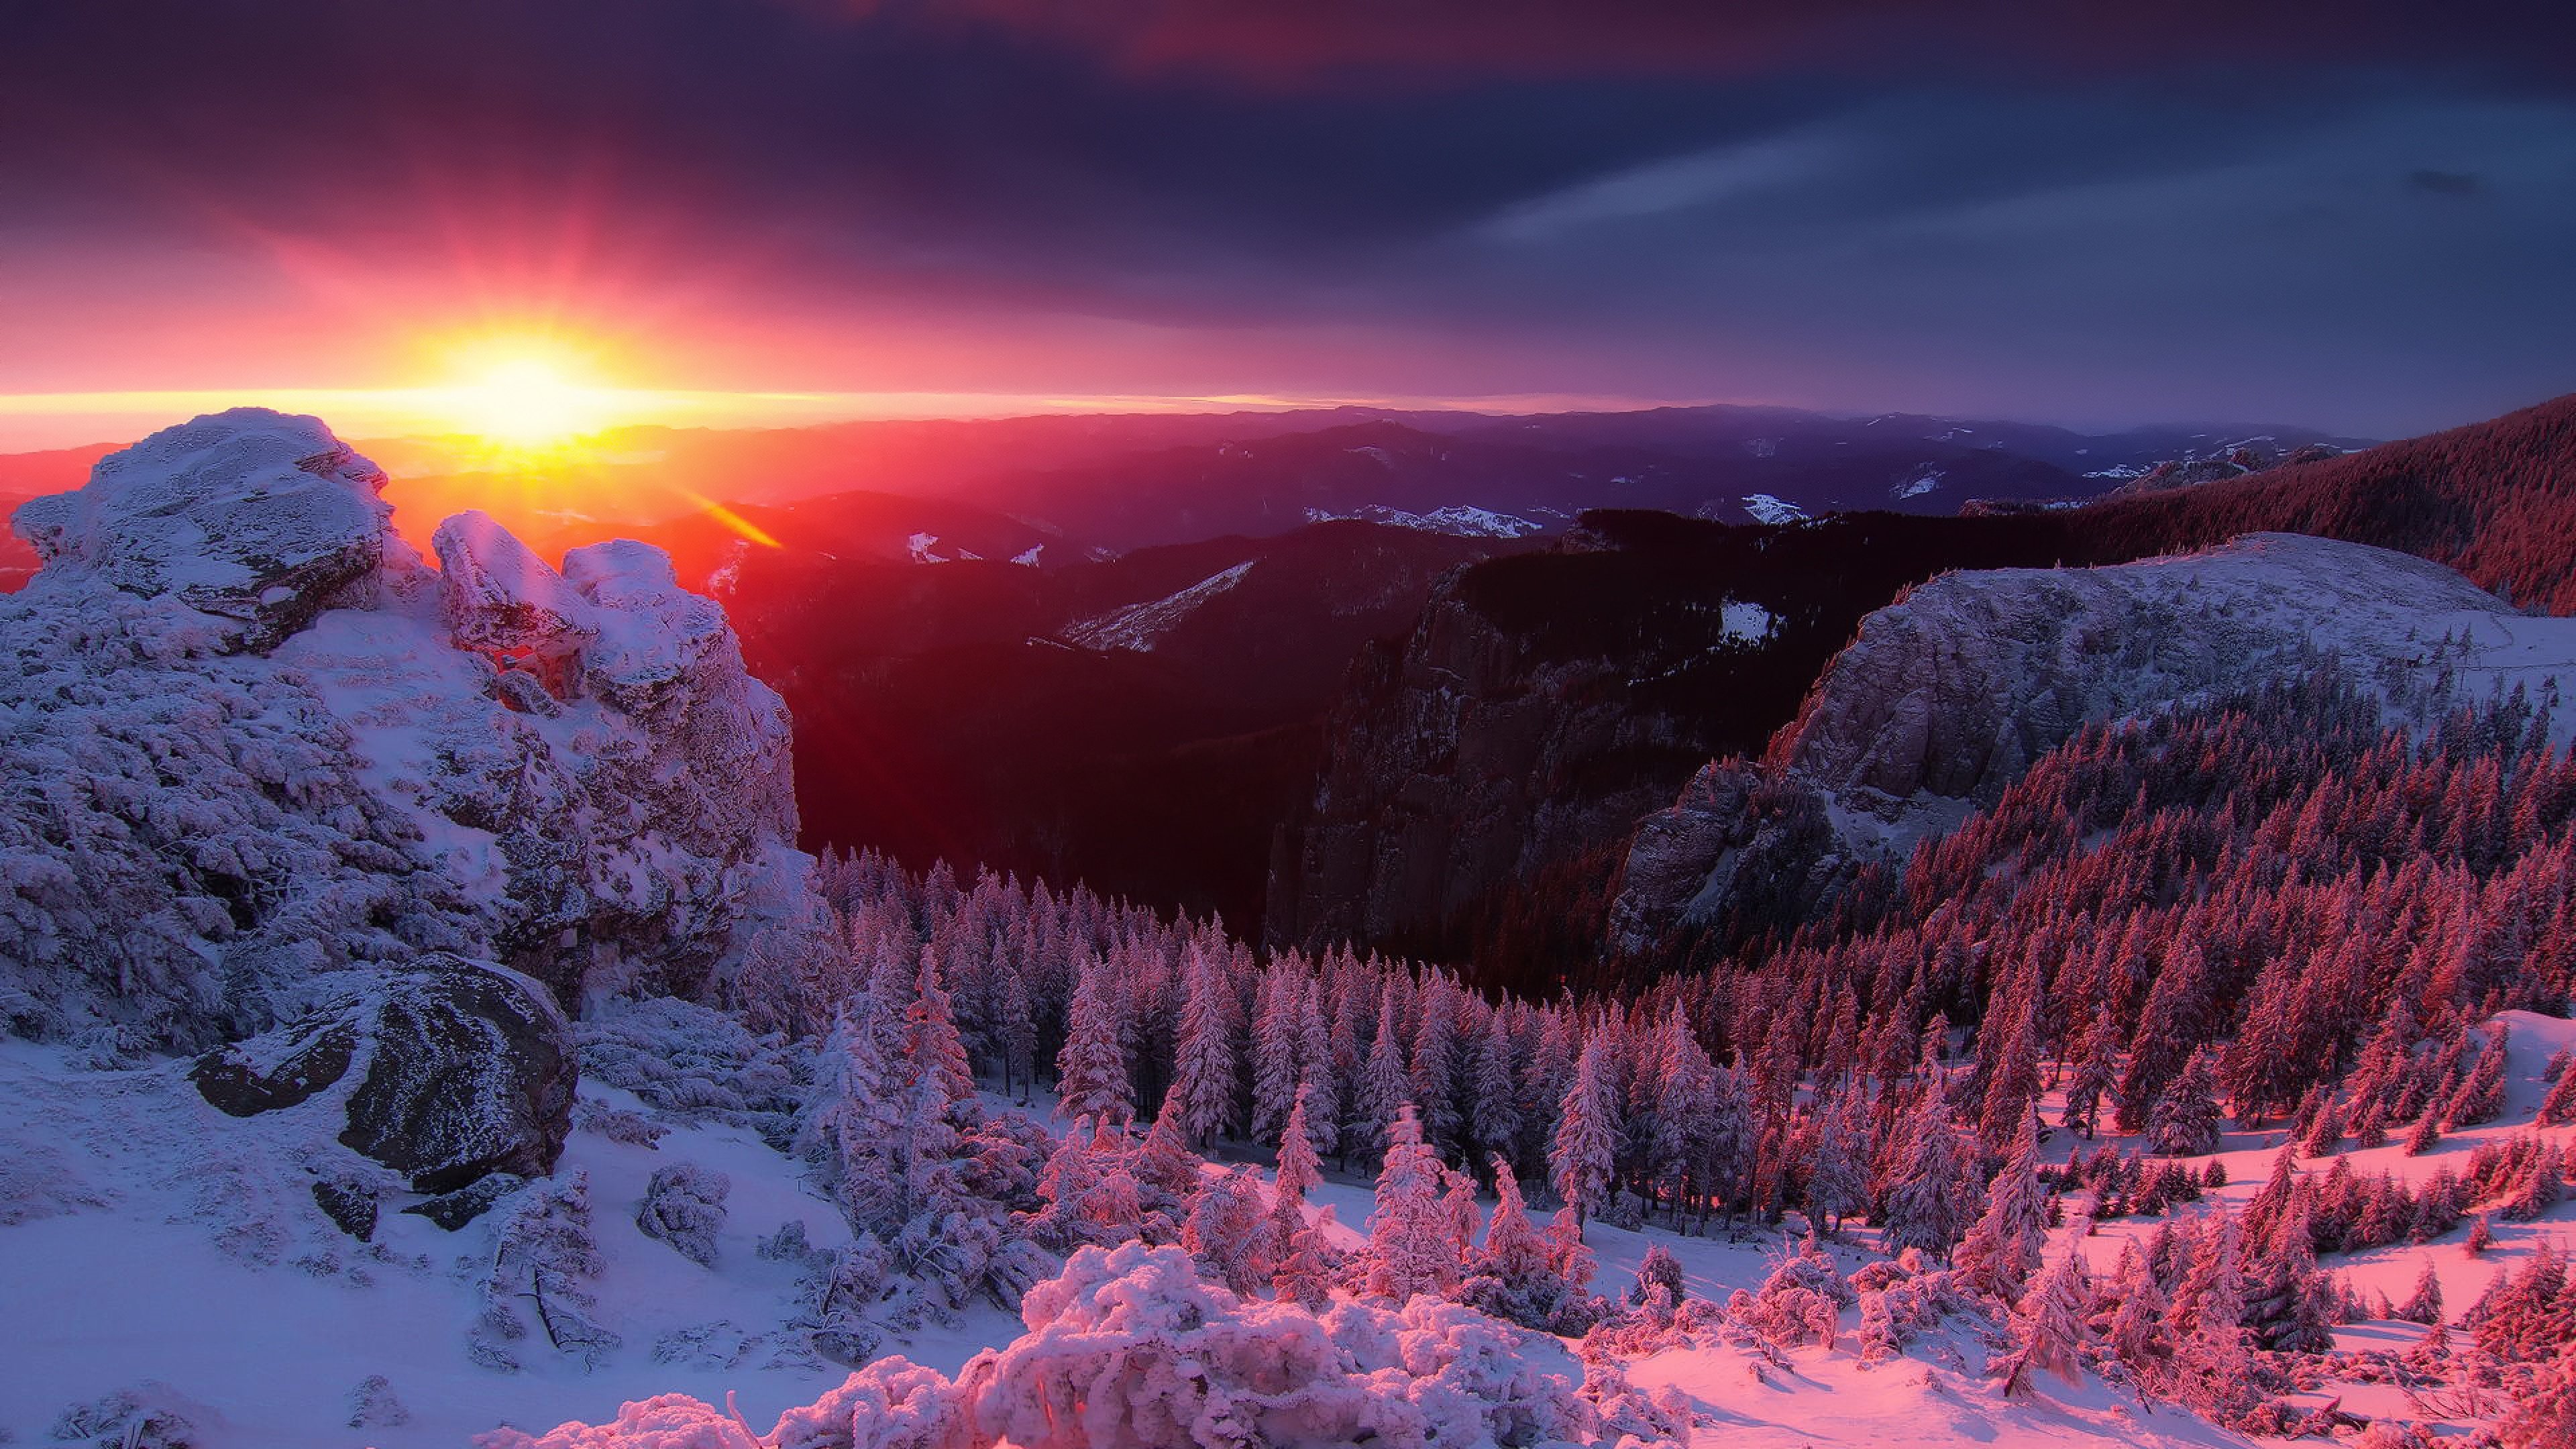 Download Wallpaper 3840x2160 Alps Mountains Winter Sunset 4K Ultra